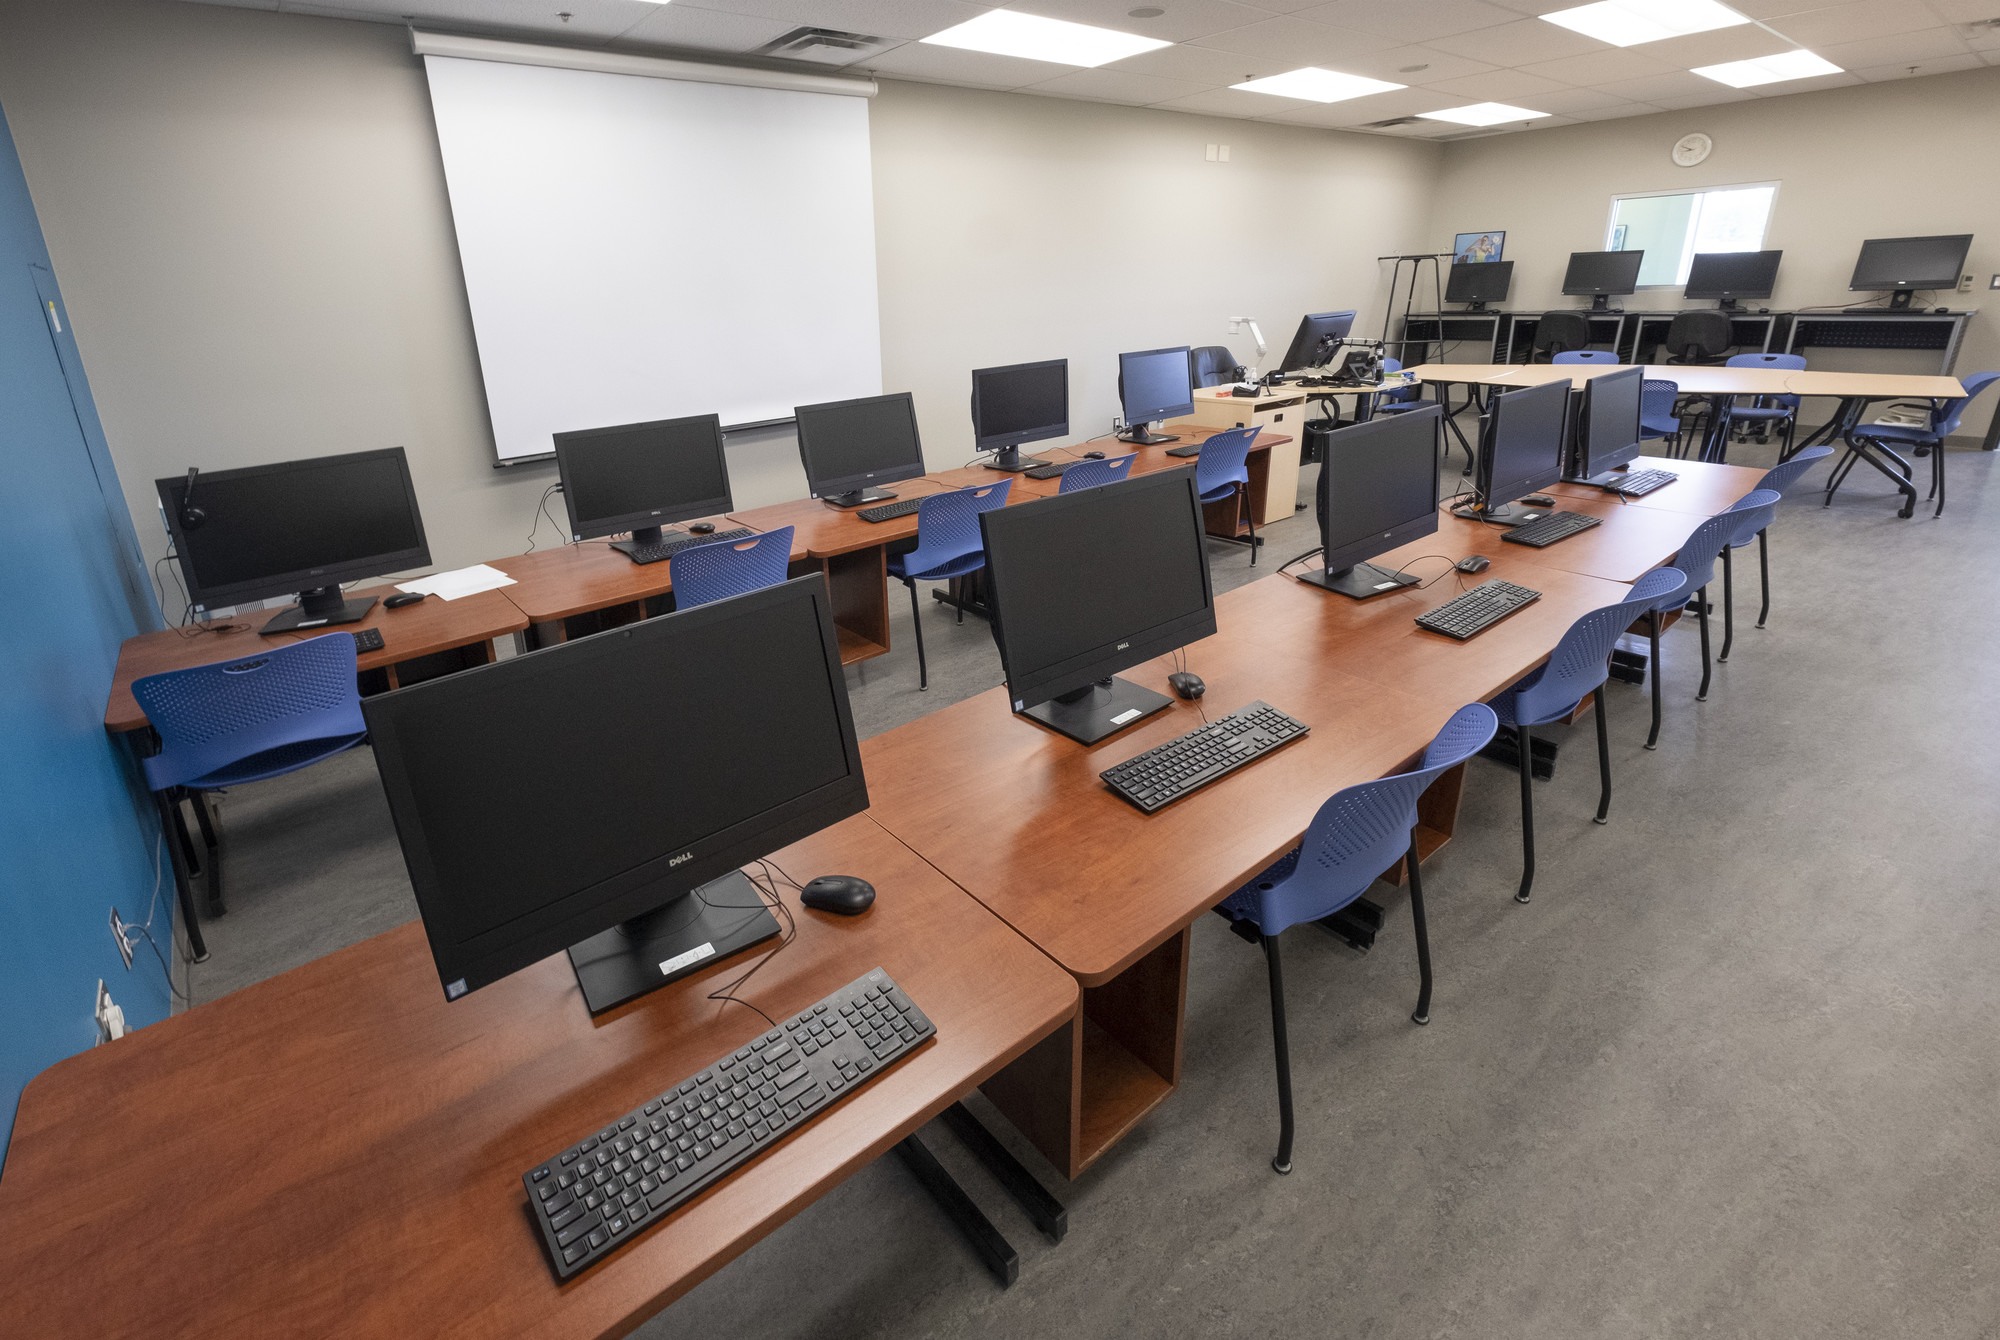 A computer lab at the Orangeville Campus